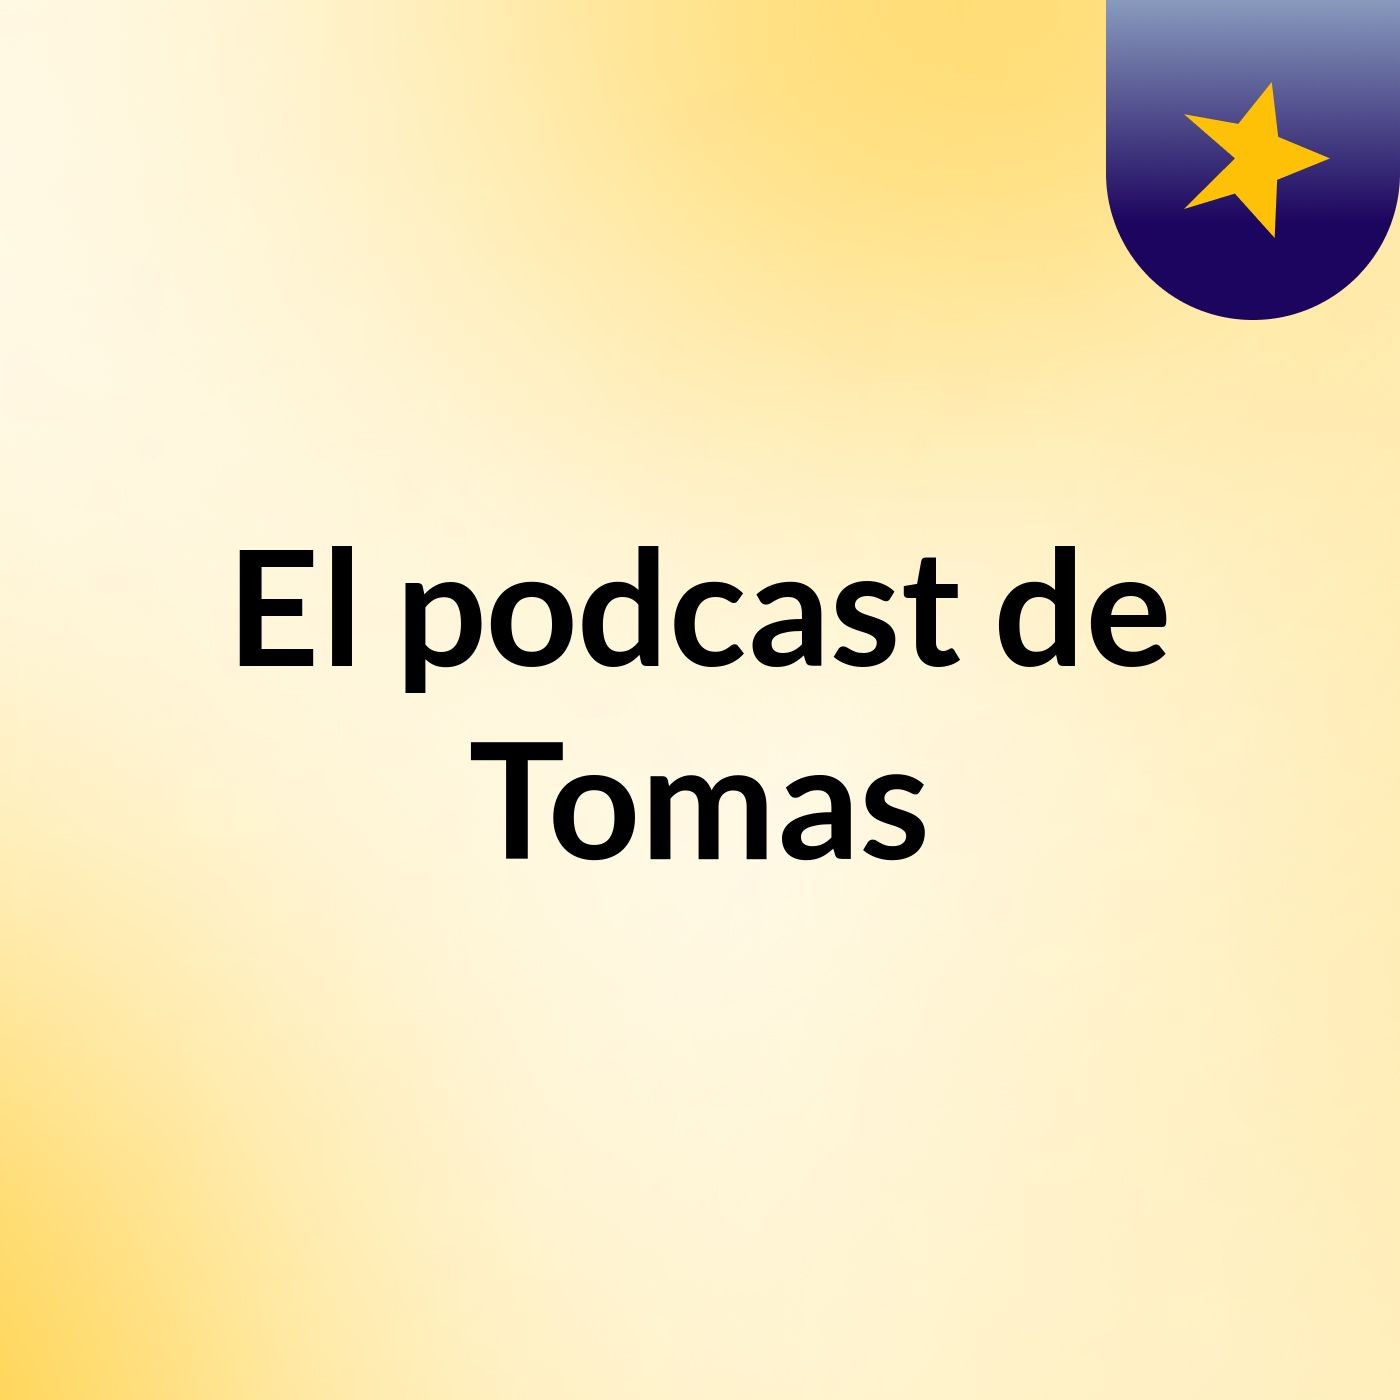 El podcast de Tomas